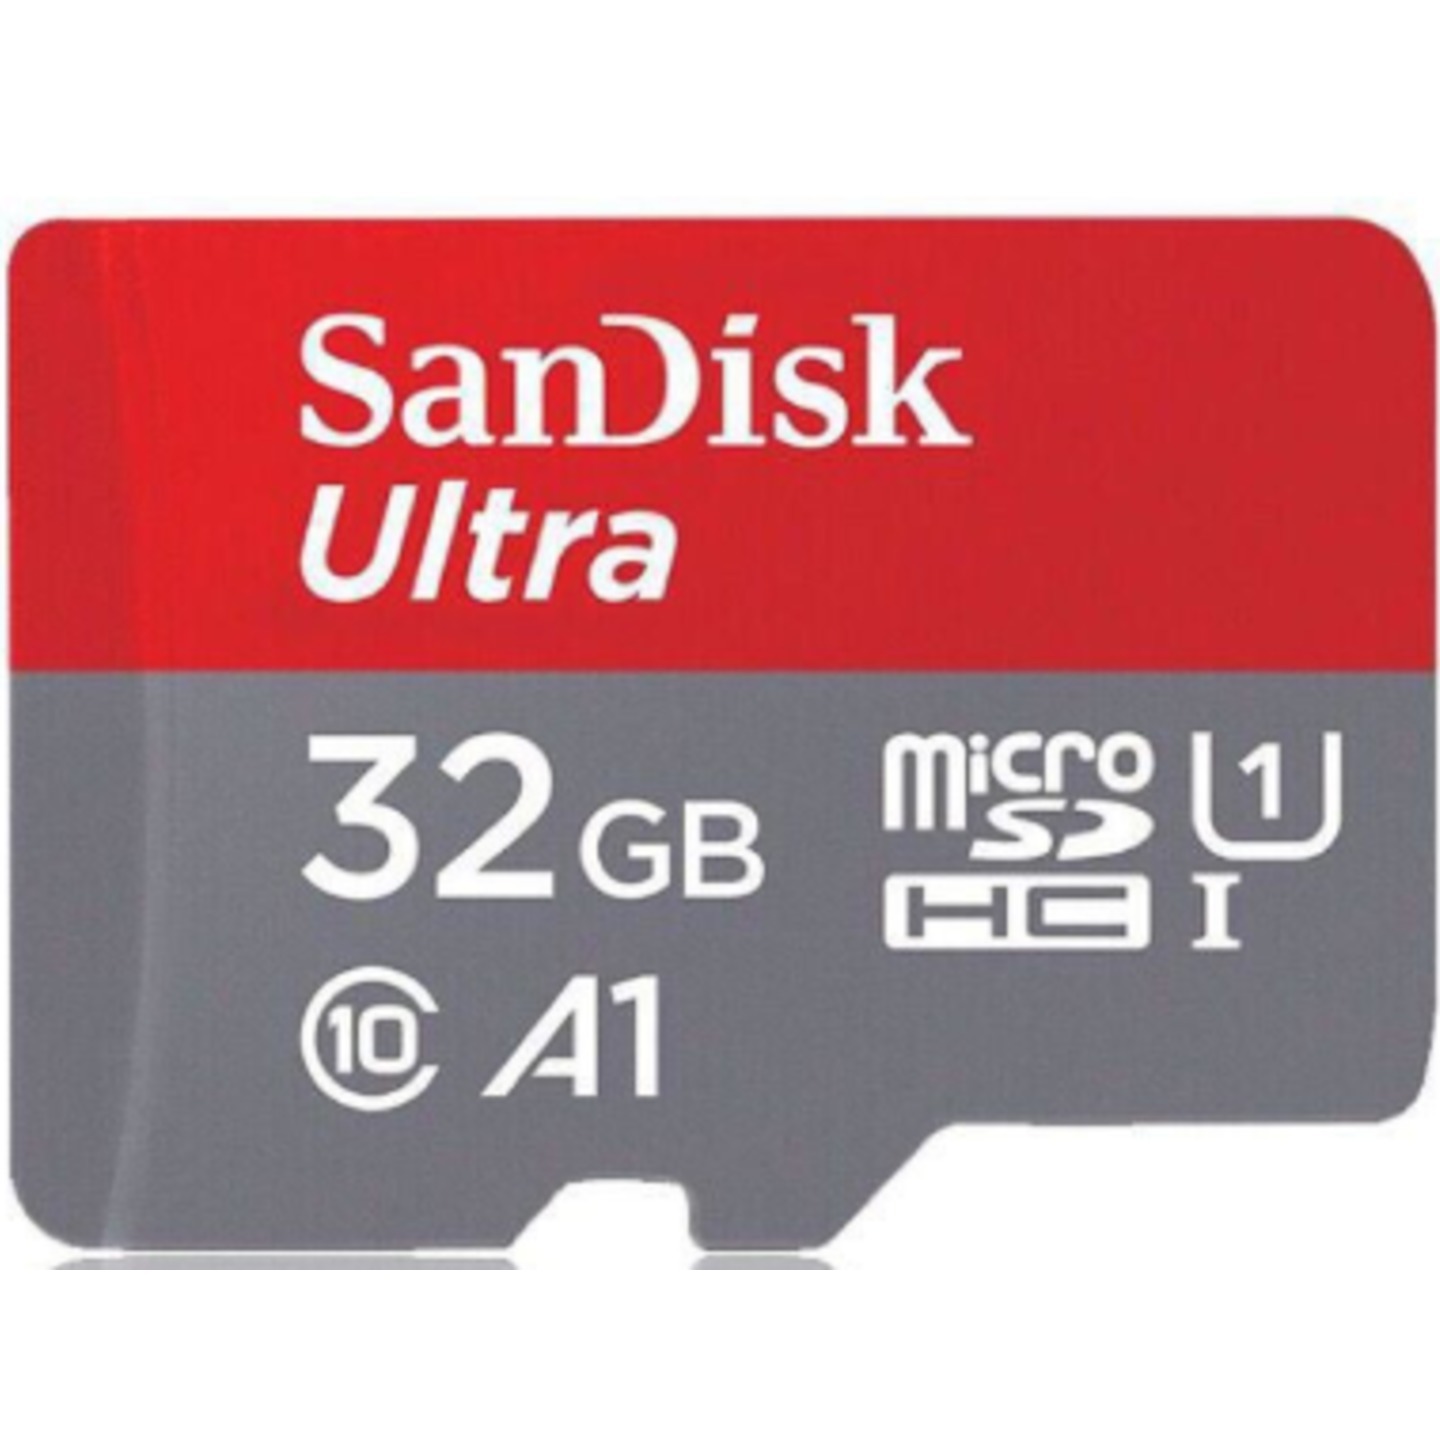 SanDisk Ultra 32GB MicroSD USH-1 100mb/s